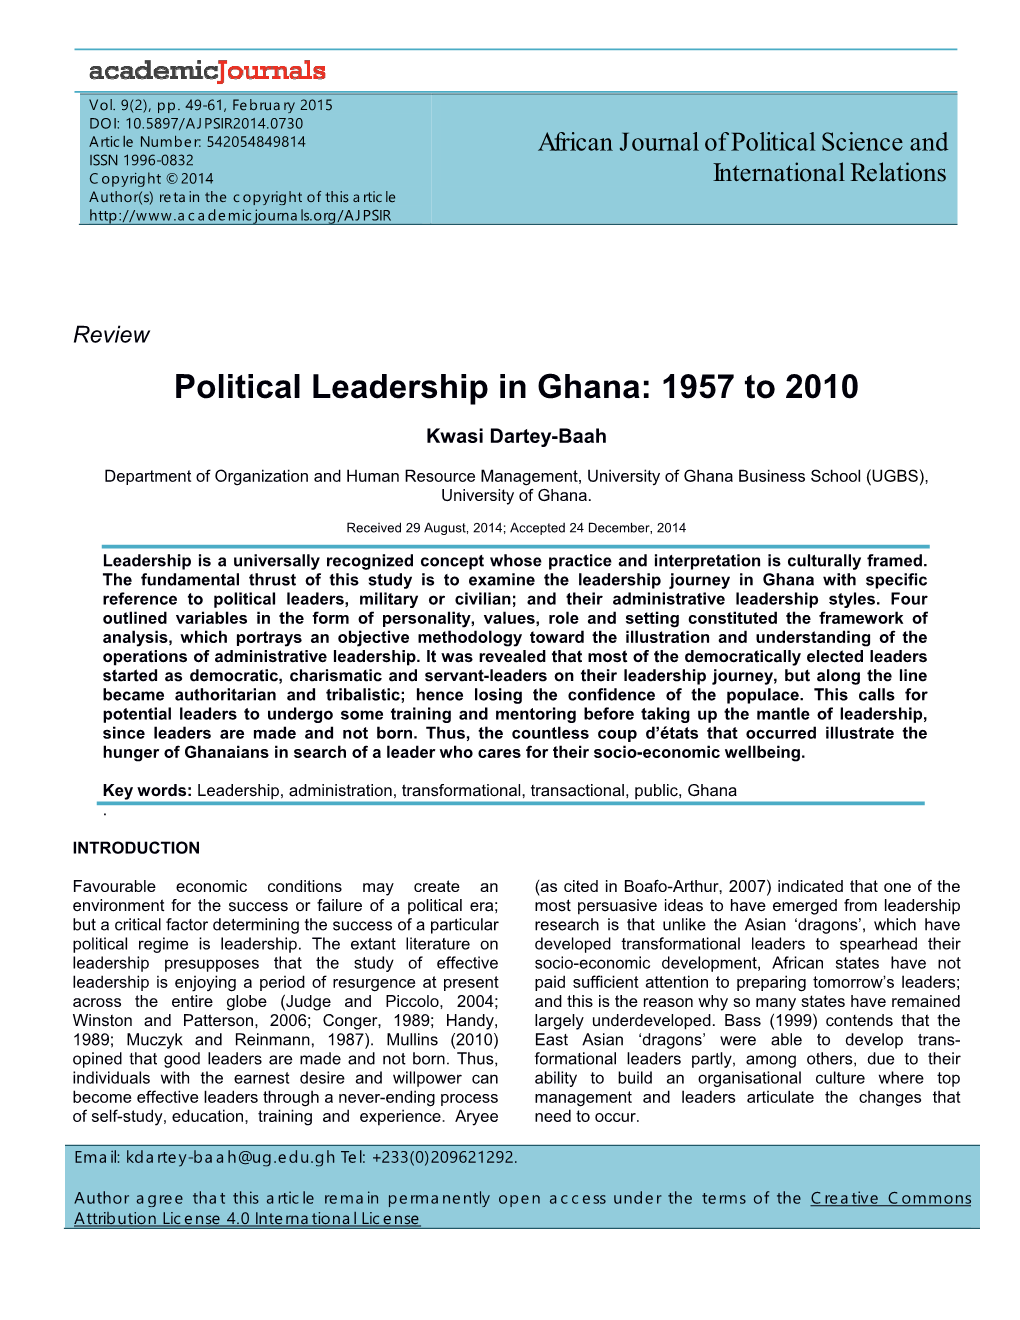 Political Leadership in Ghana: 1957 to 2010